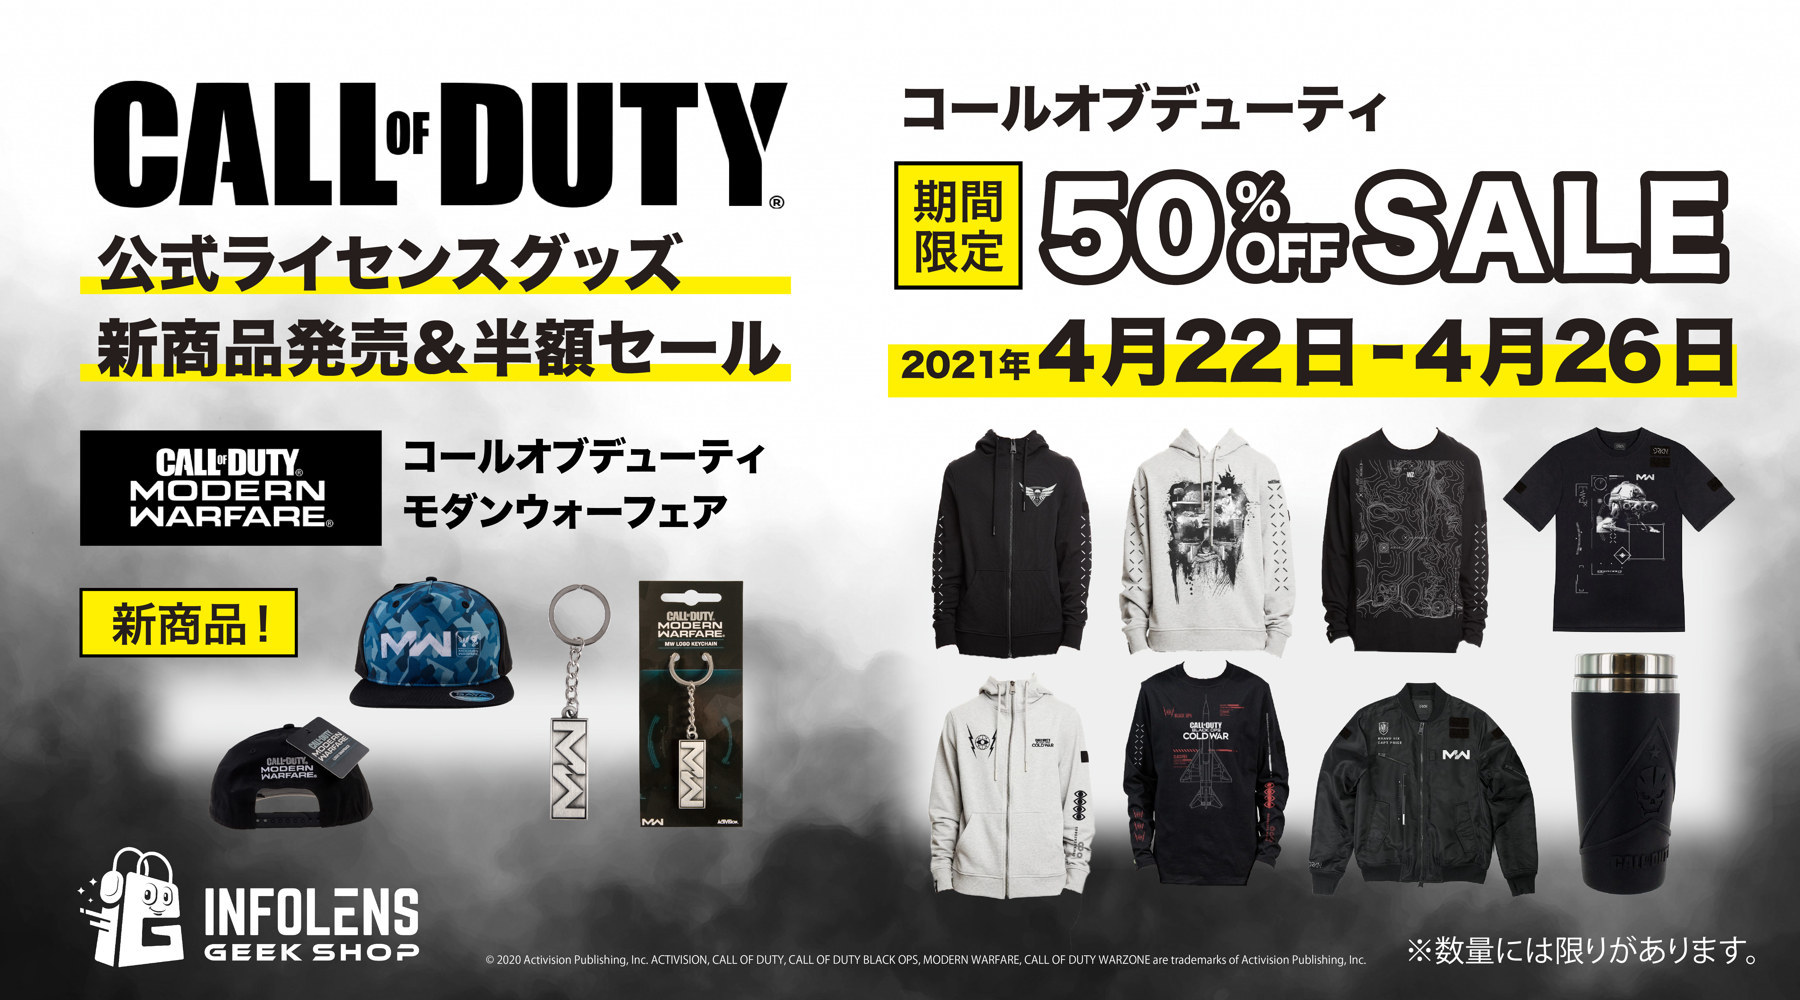 『Call of Duty』(コールオブデューティ)の新商品が続々入荷！
半額セールも同時開催のGW直前キャンペーン実施！